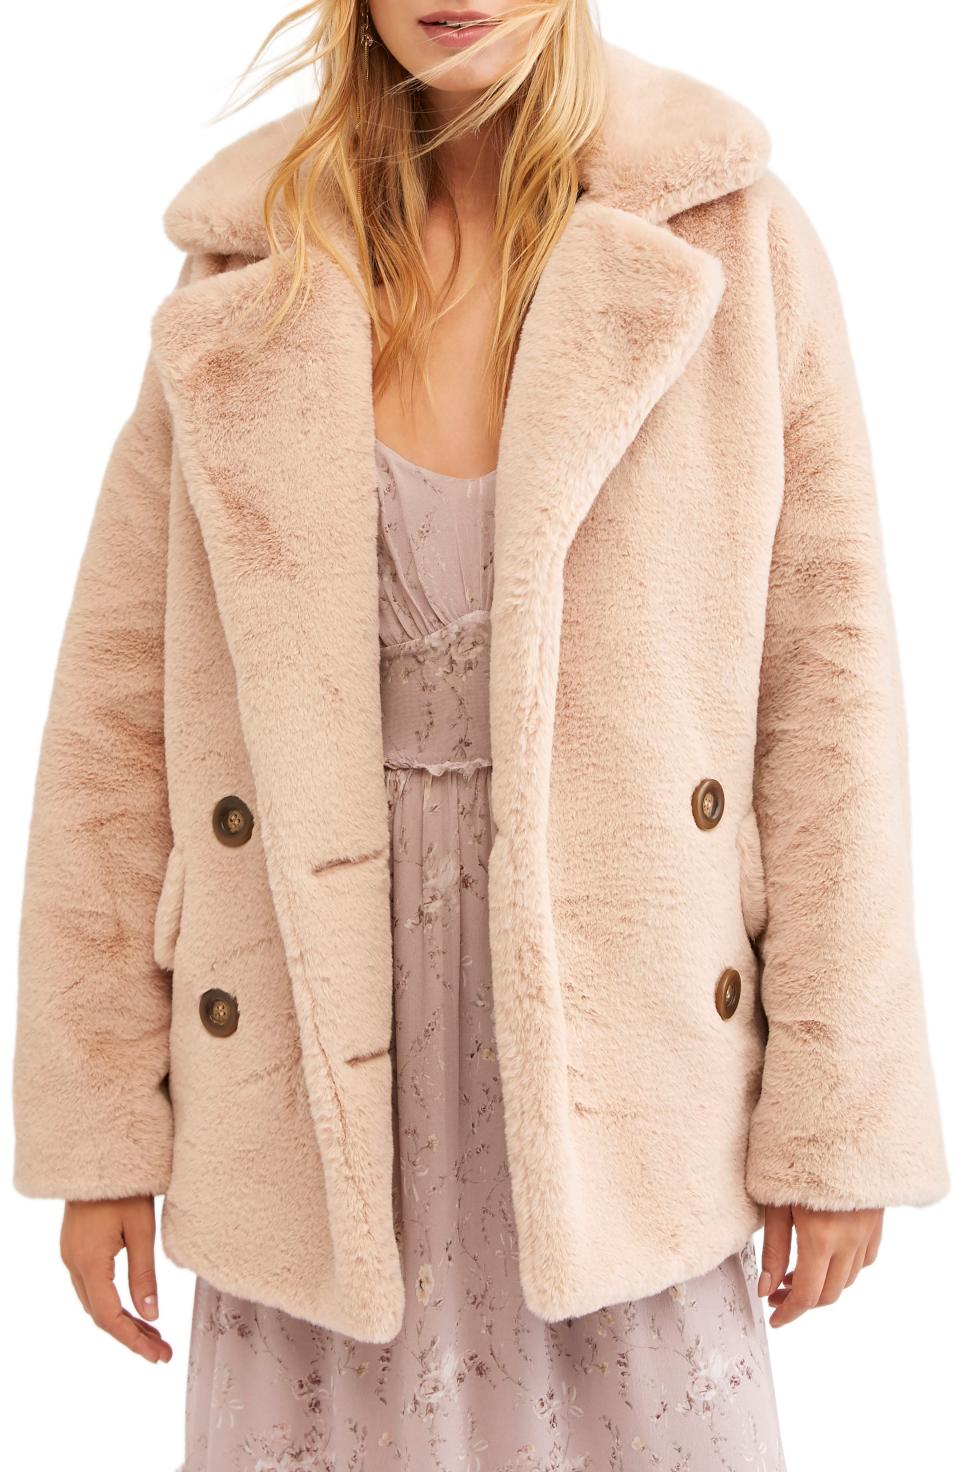 22) A Cute Coat That'll Keep You Hella Warm